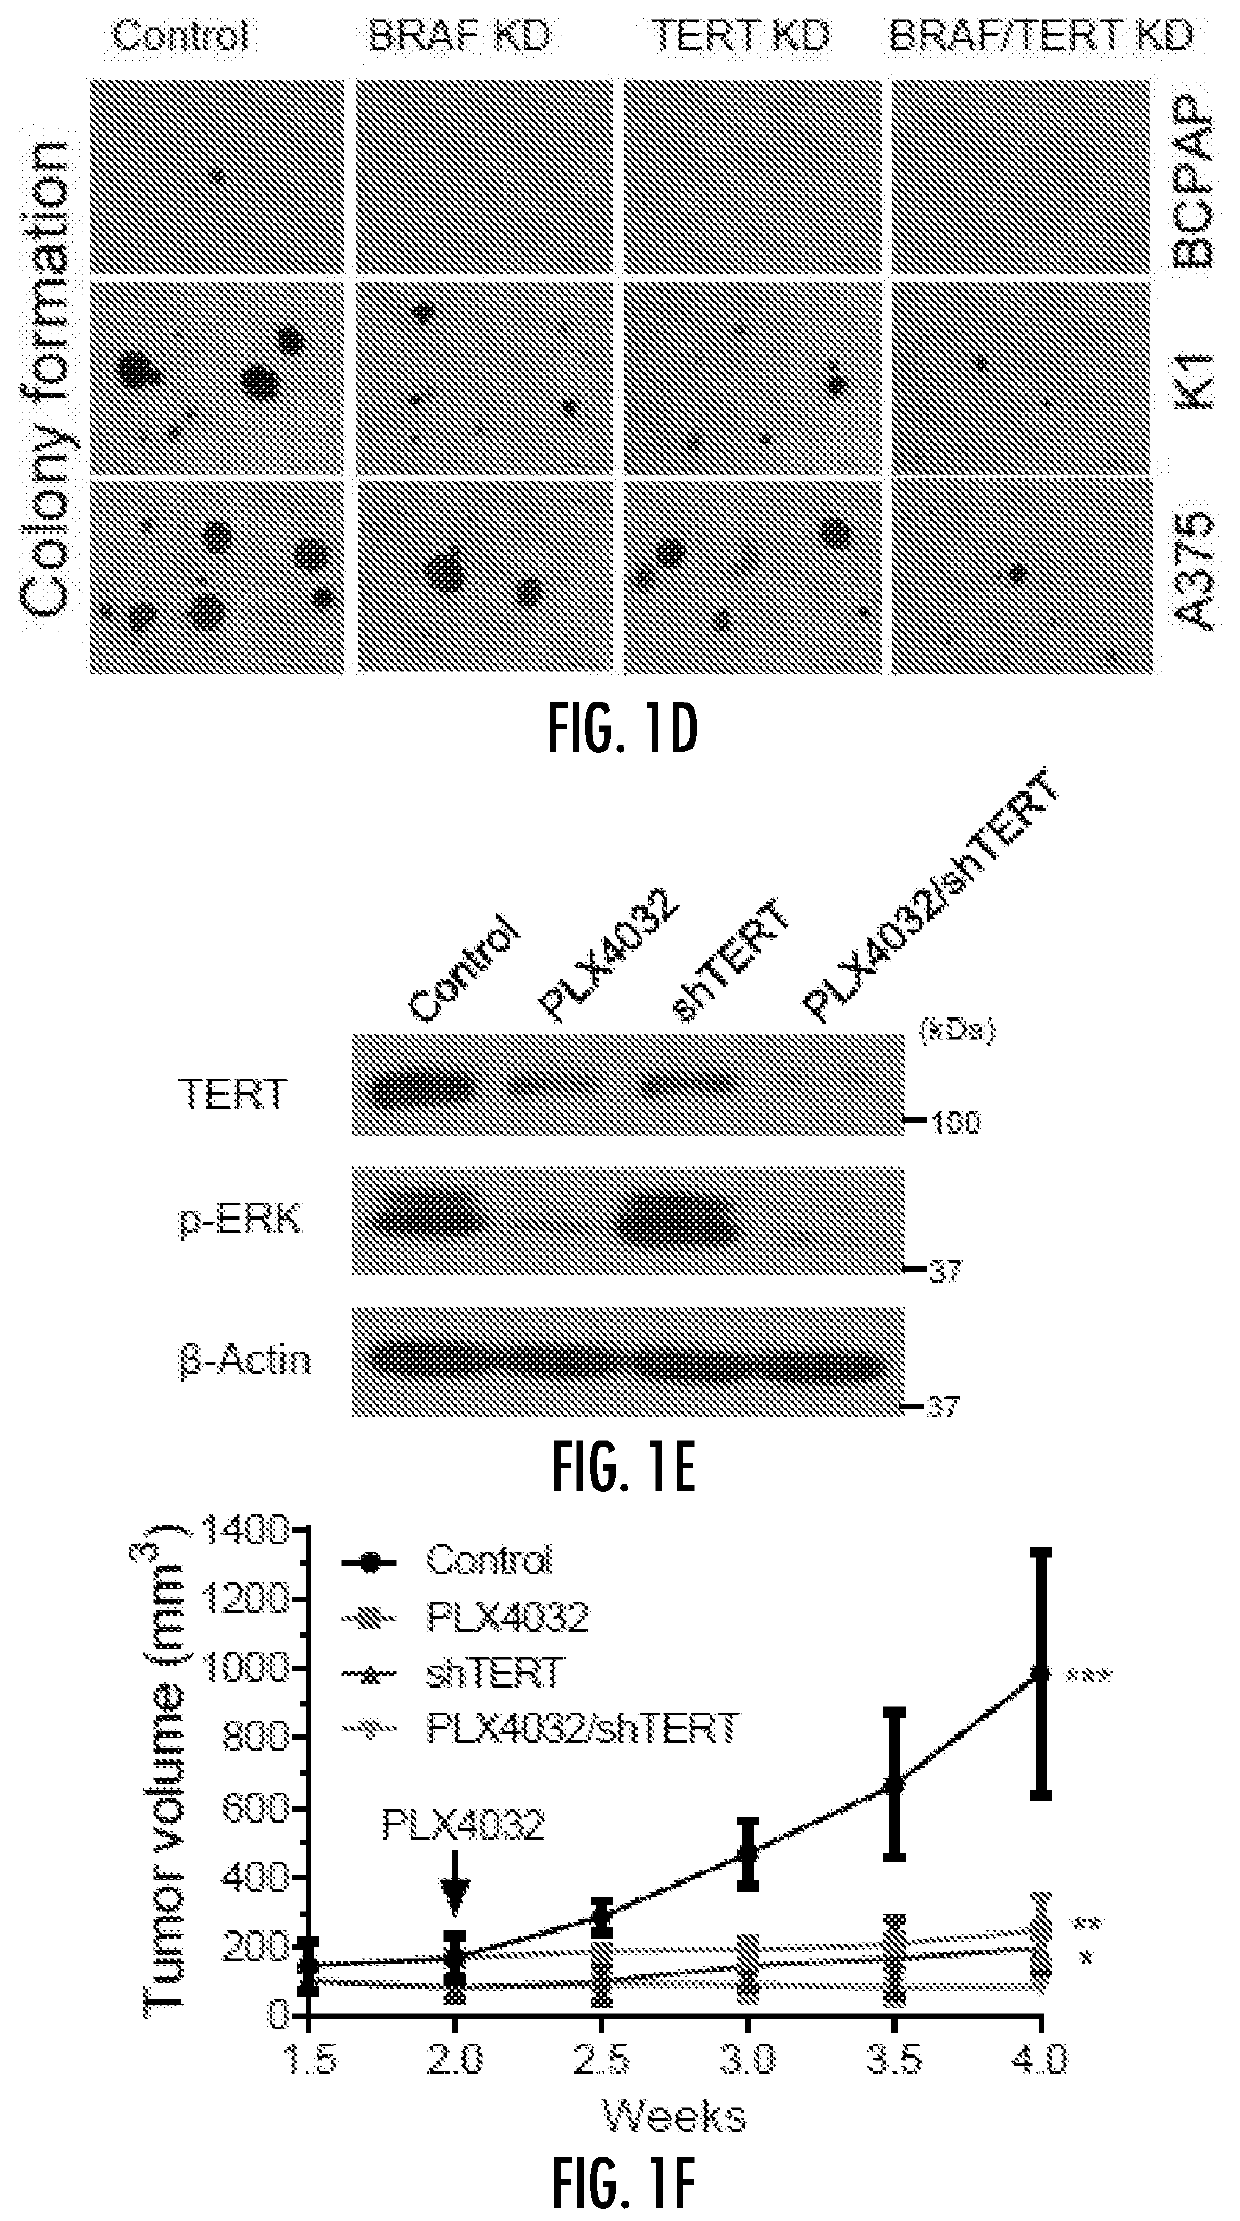 Regulation of mutant tert by braf v600e/map kinase pathway through fos/gabp in human cancer